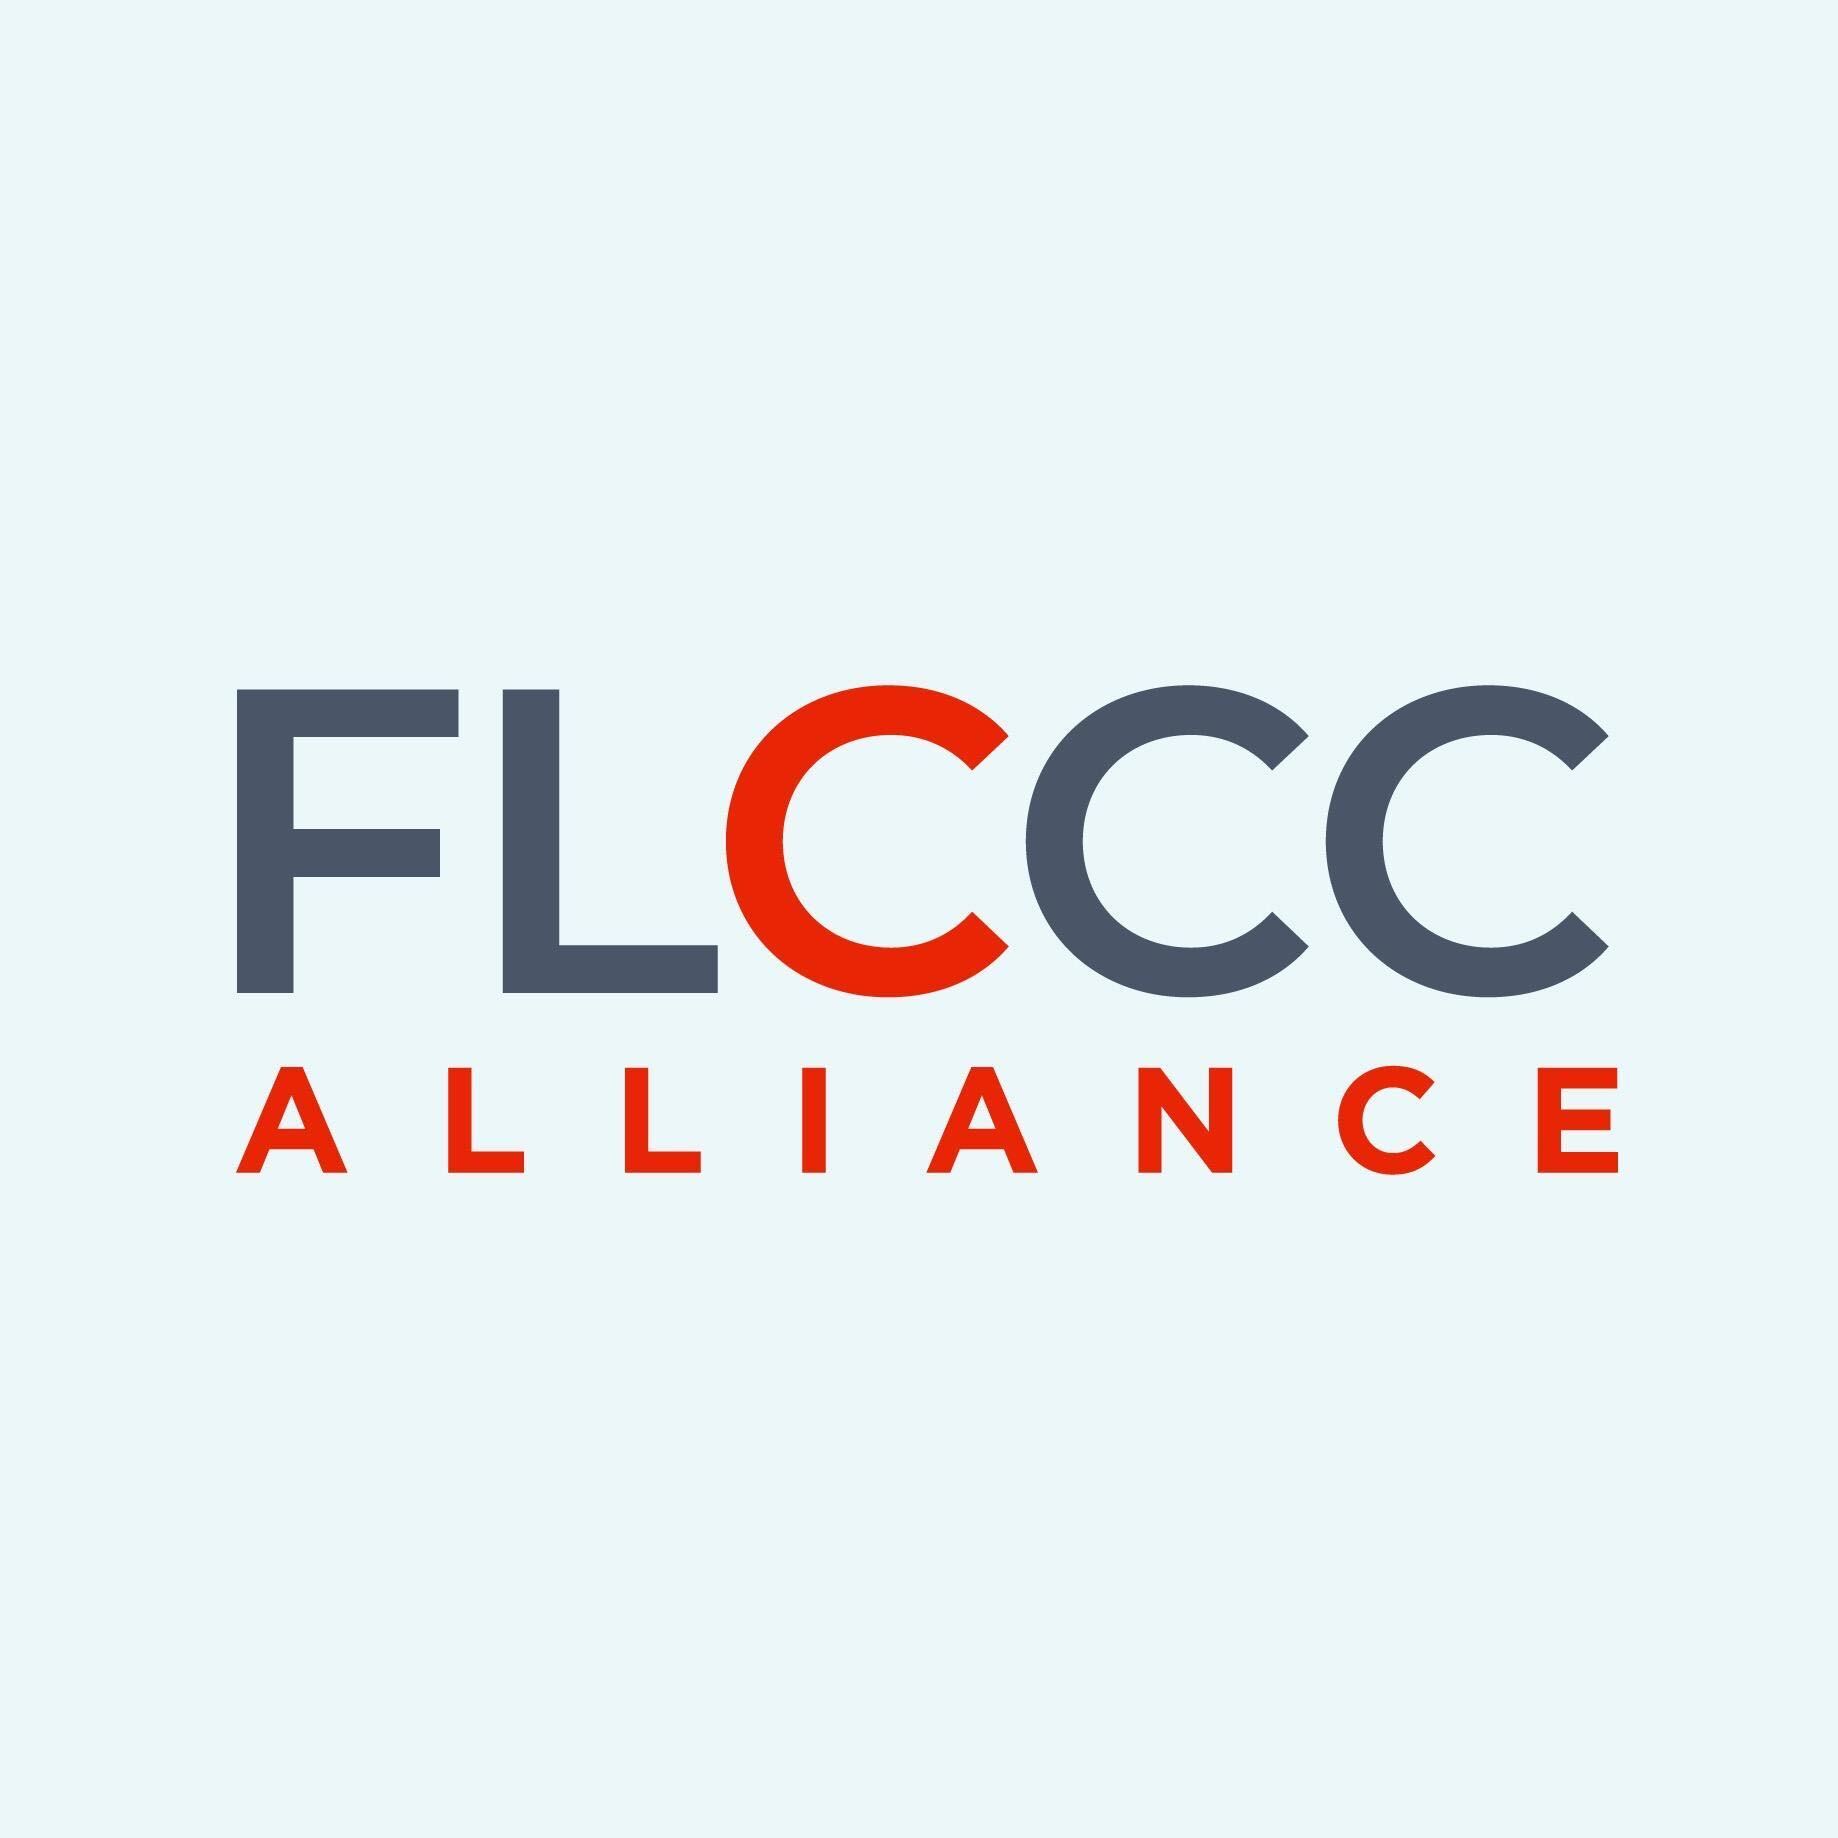 Alliance FLCCC